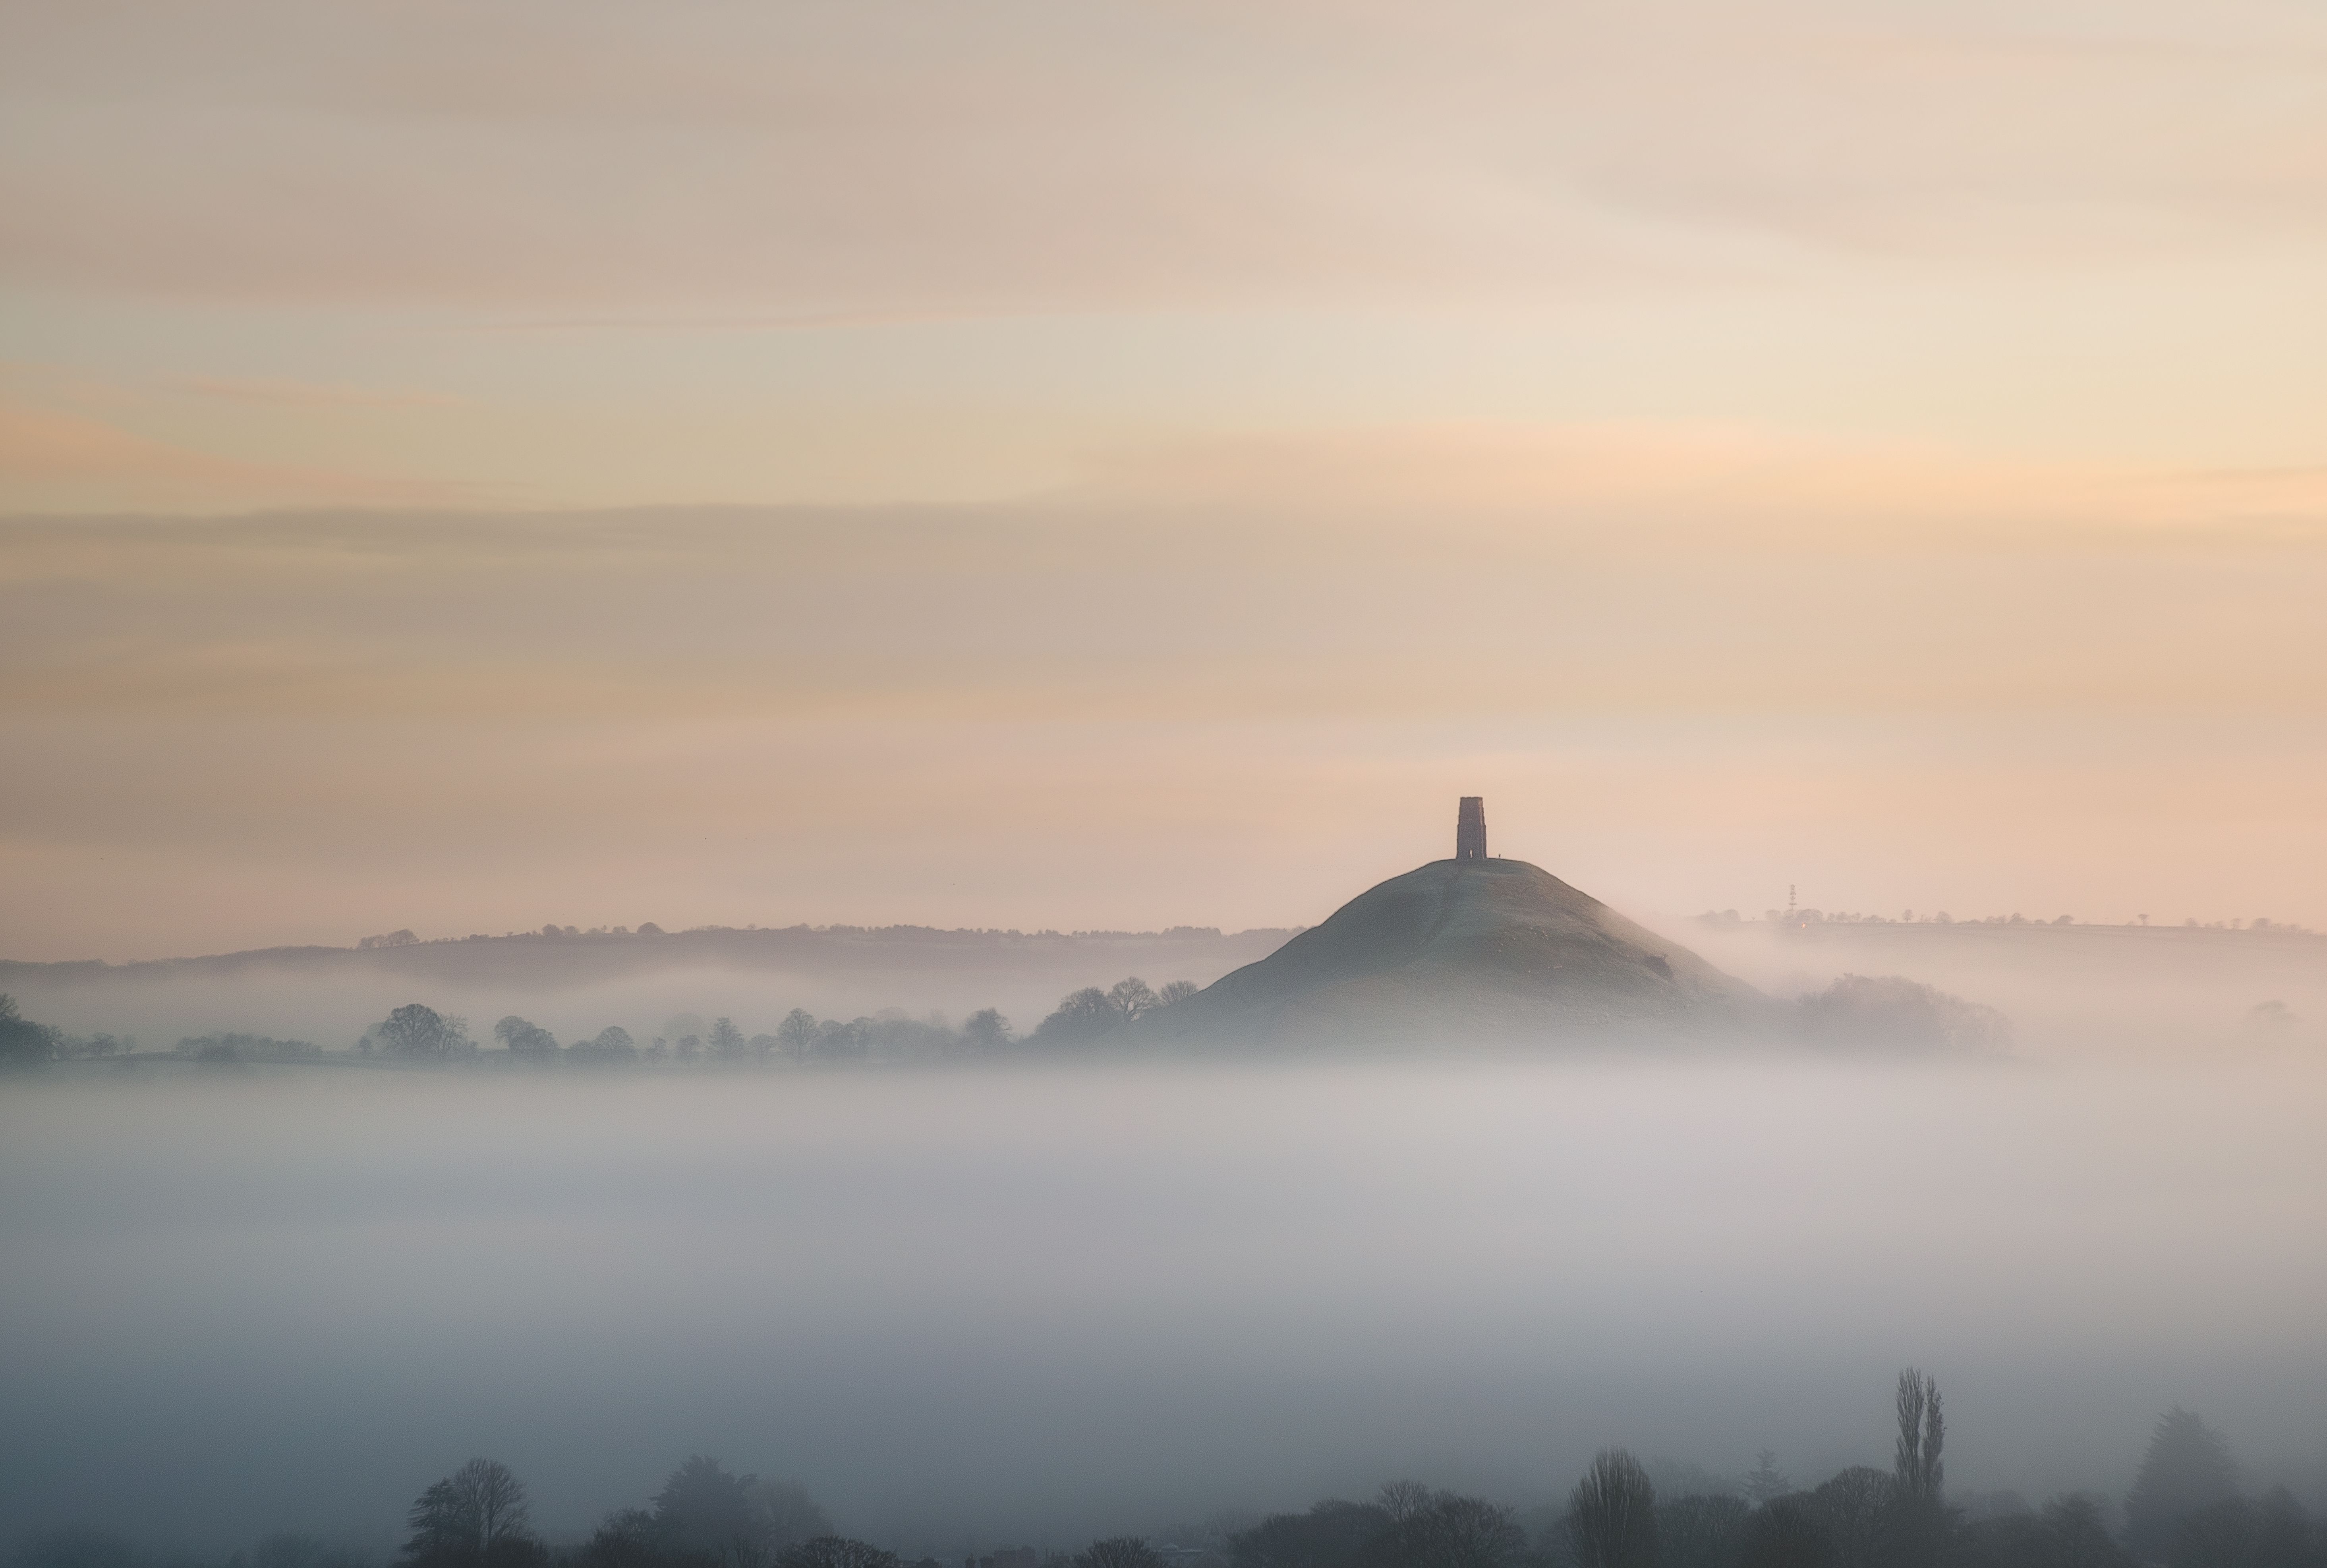 Misty winter scenery of iconic Somerset landmark - Glastonbury Tor